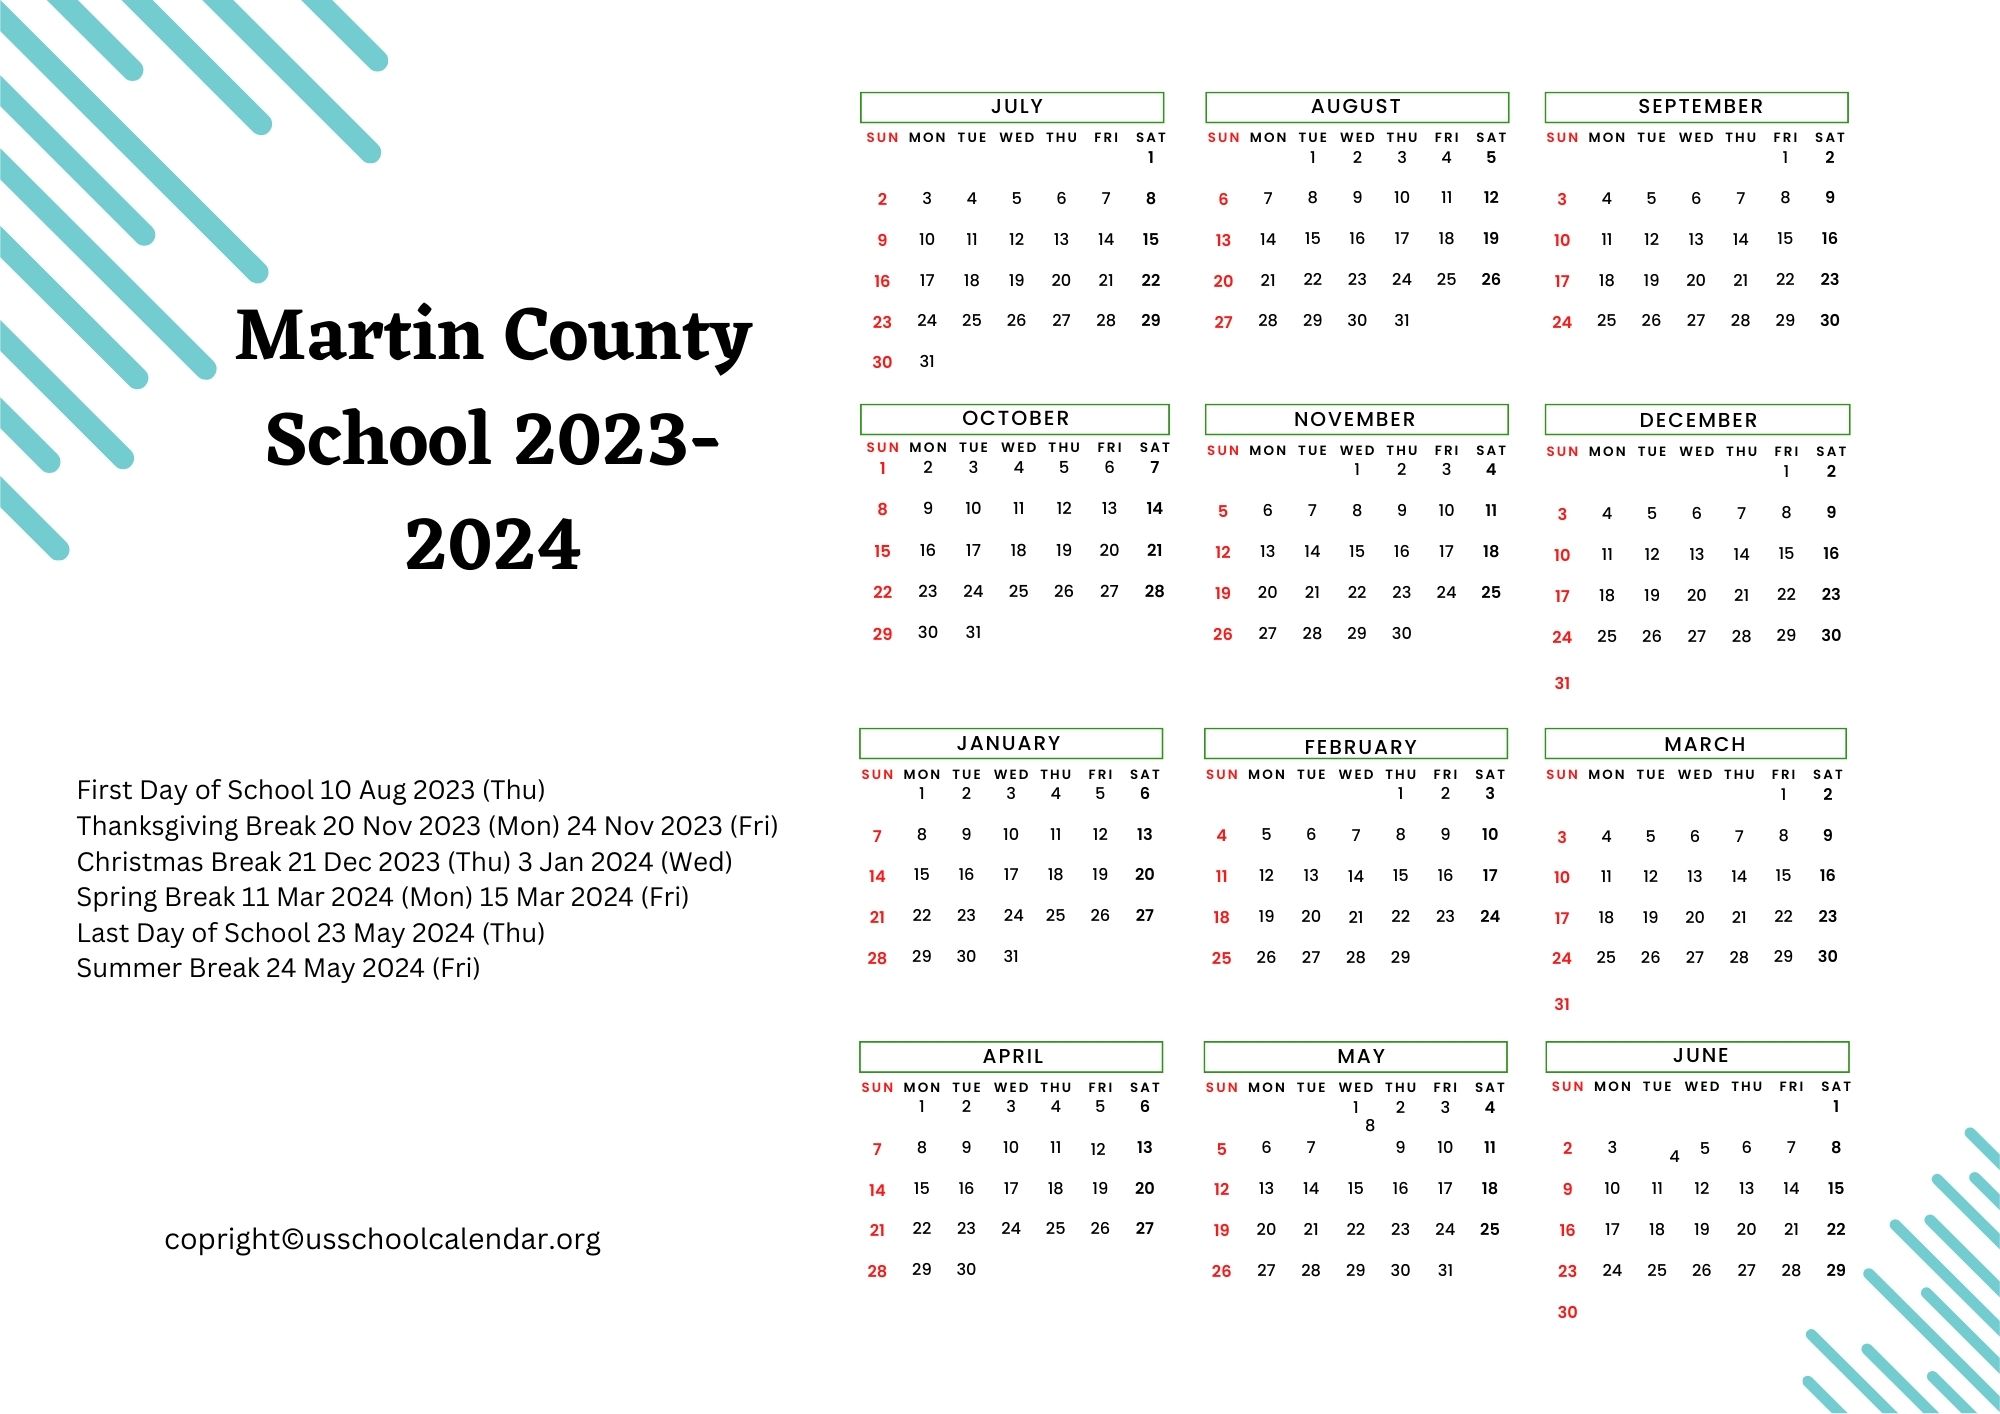 martin-county-school-calendar-with-holidays-2023-2024